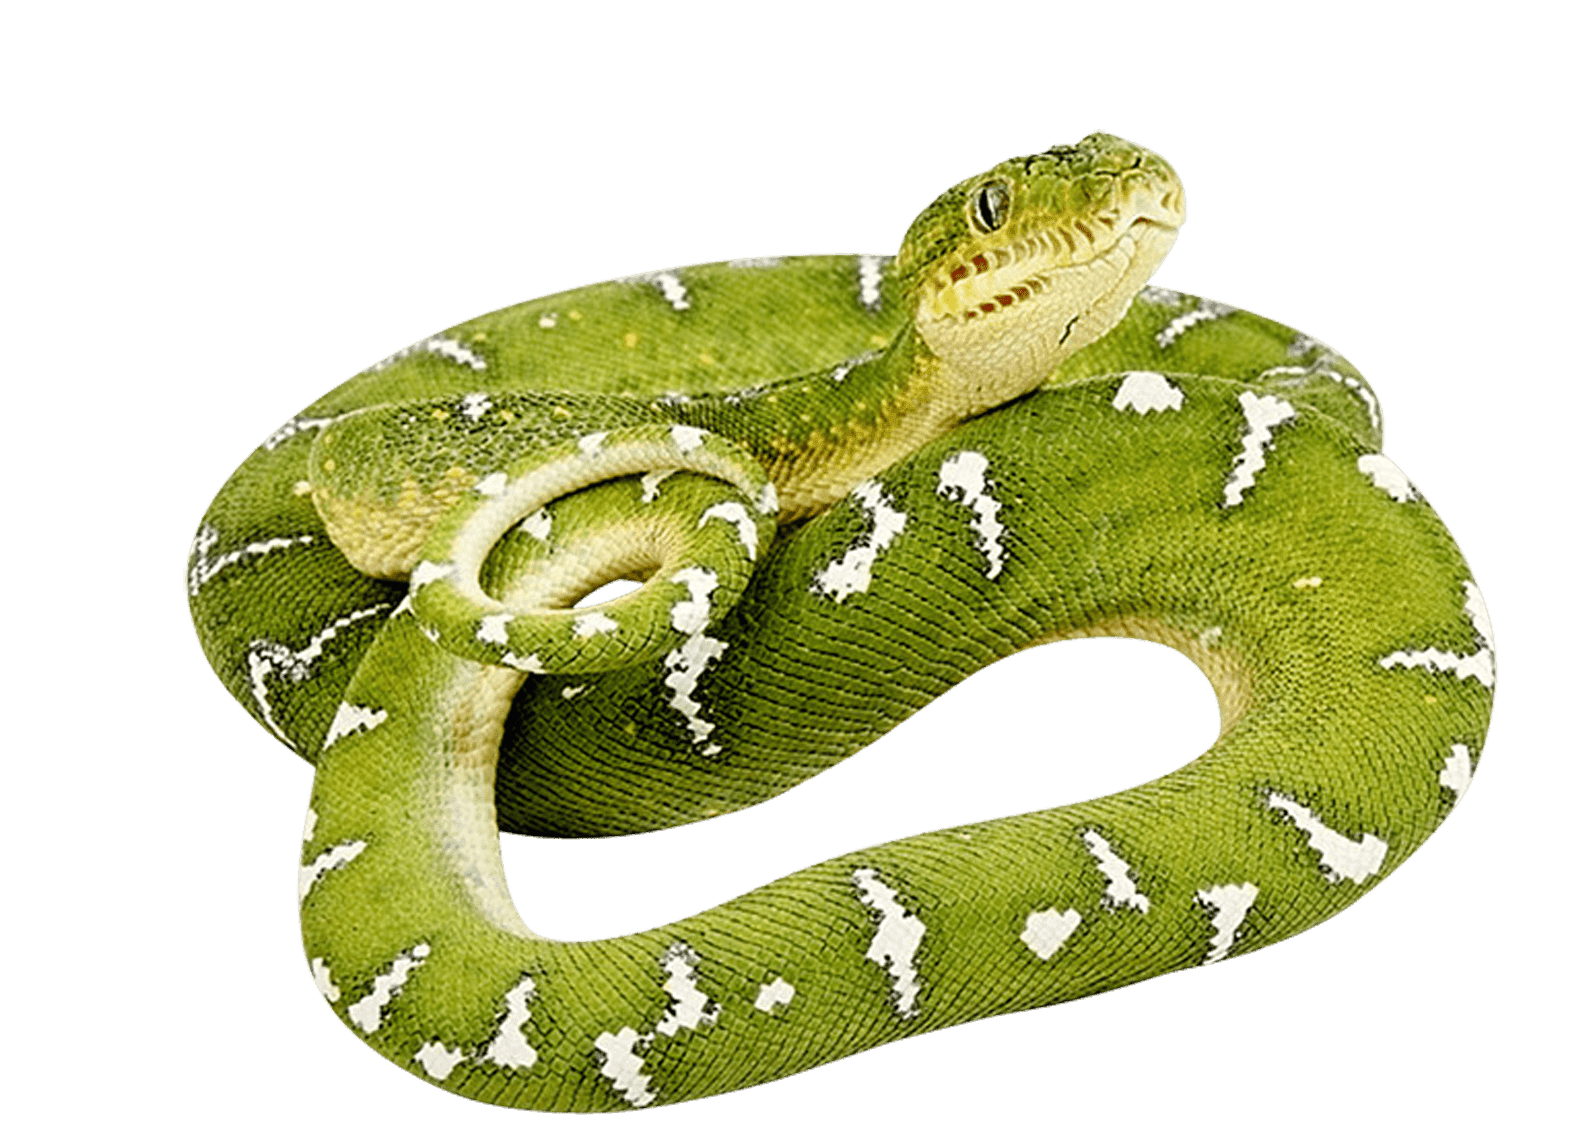 Fond de limage anaconda commune